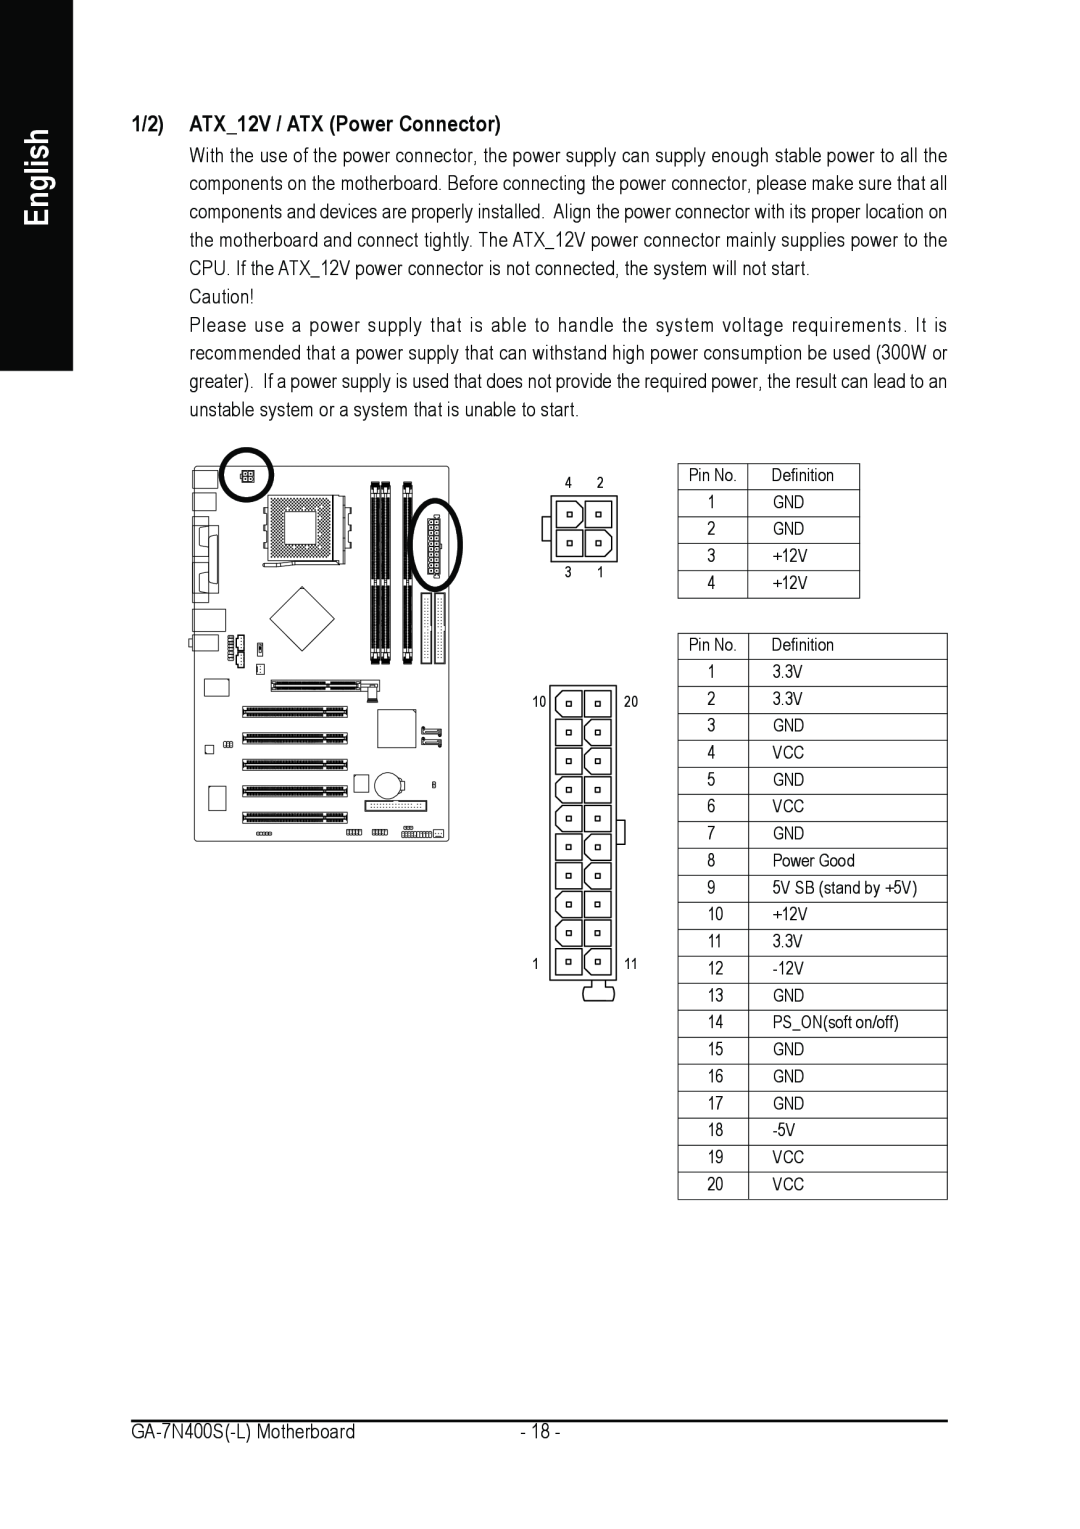 Gigabyte GA-7N400S-L user manual 1/2 ATX12V / ATX Power Connector, English 